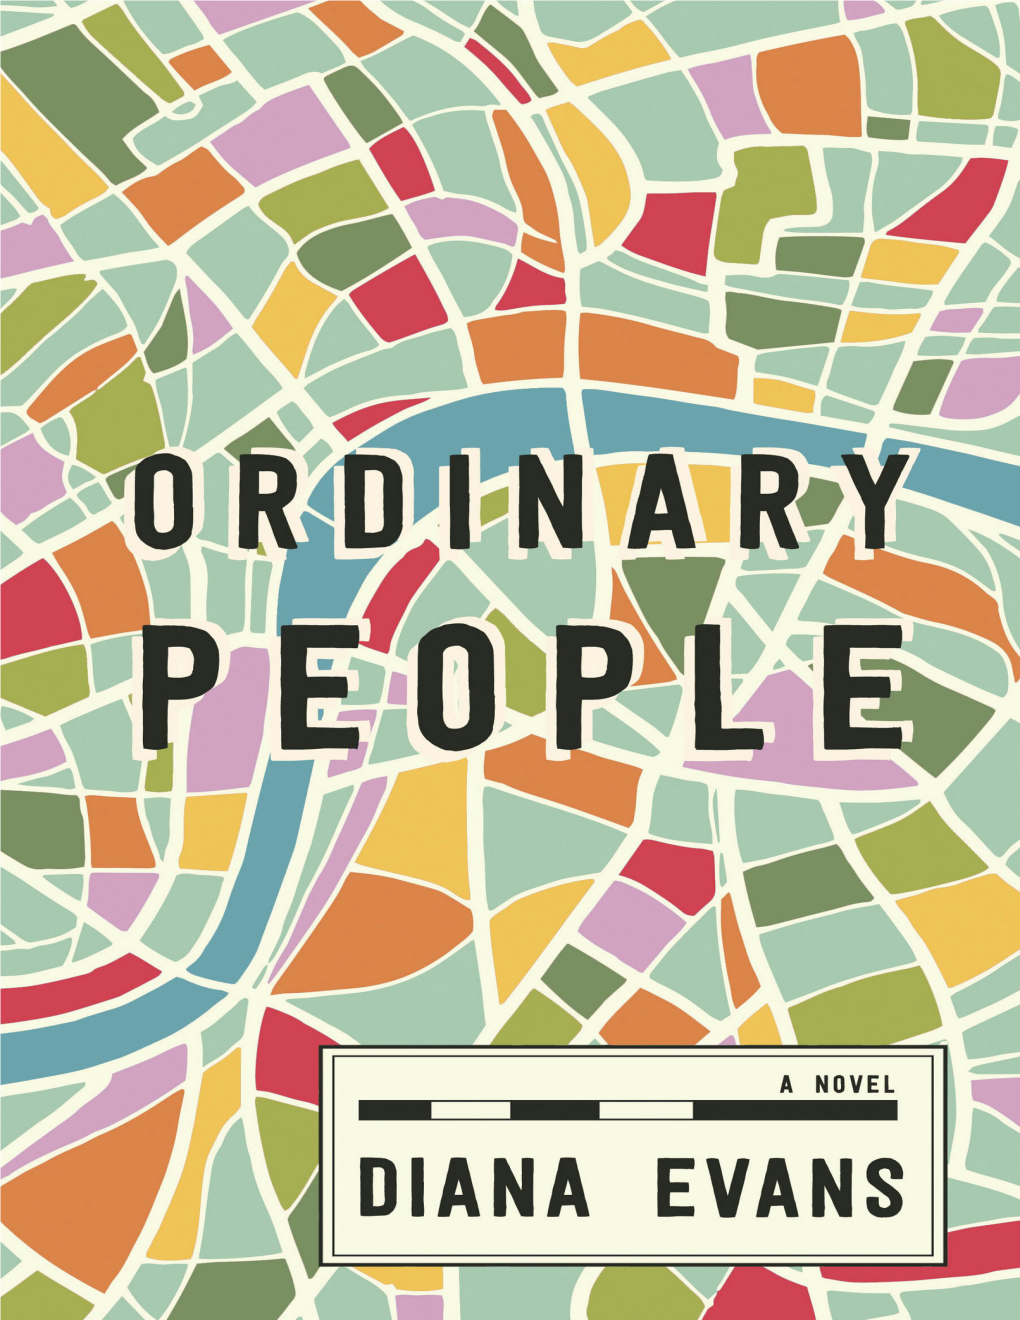 Ordinary People / Diana Evans